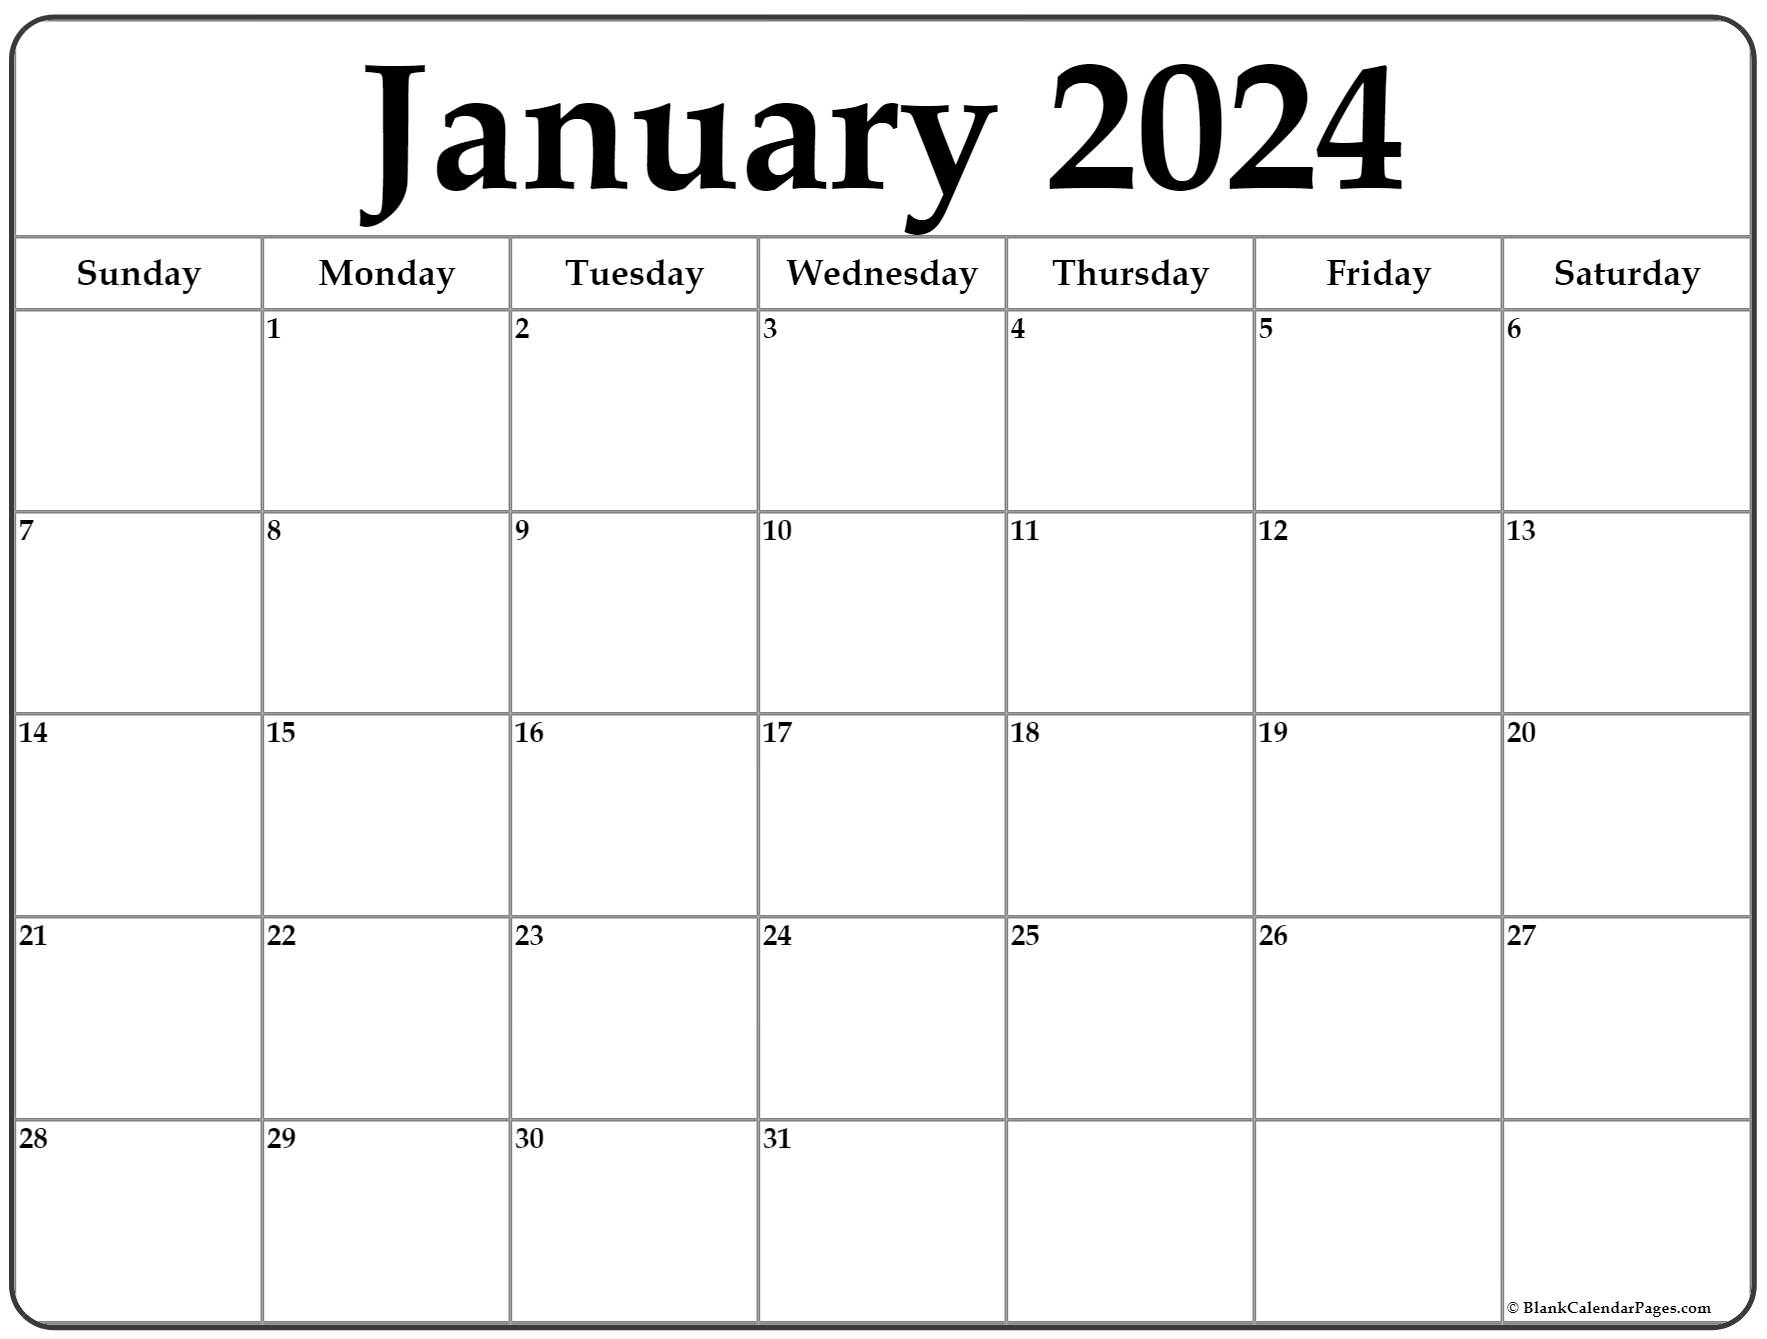 January 2024 Calendar | Free Printable Calendar for Free Monthly 2024 Calendar Printable